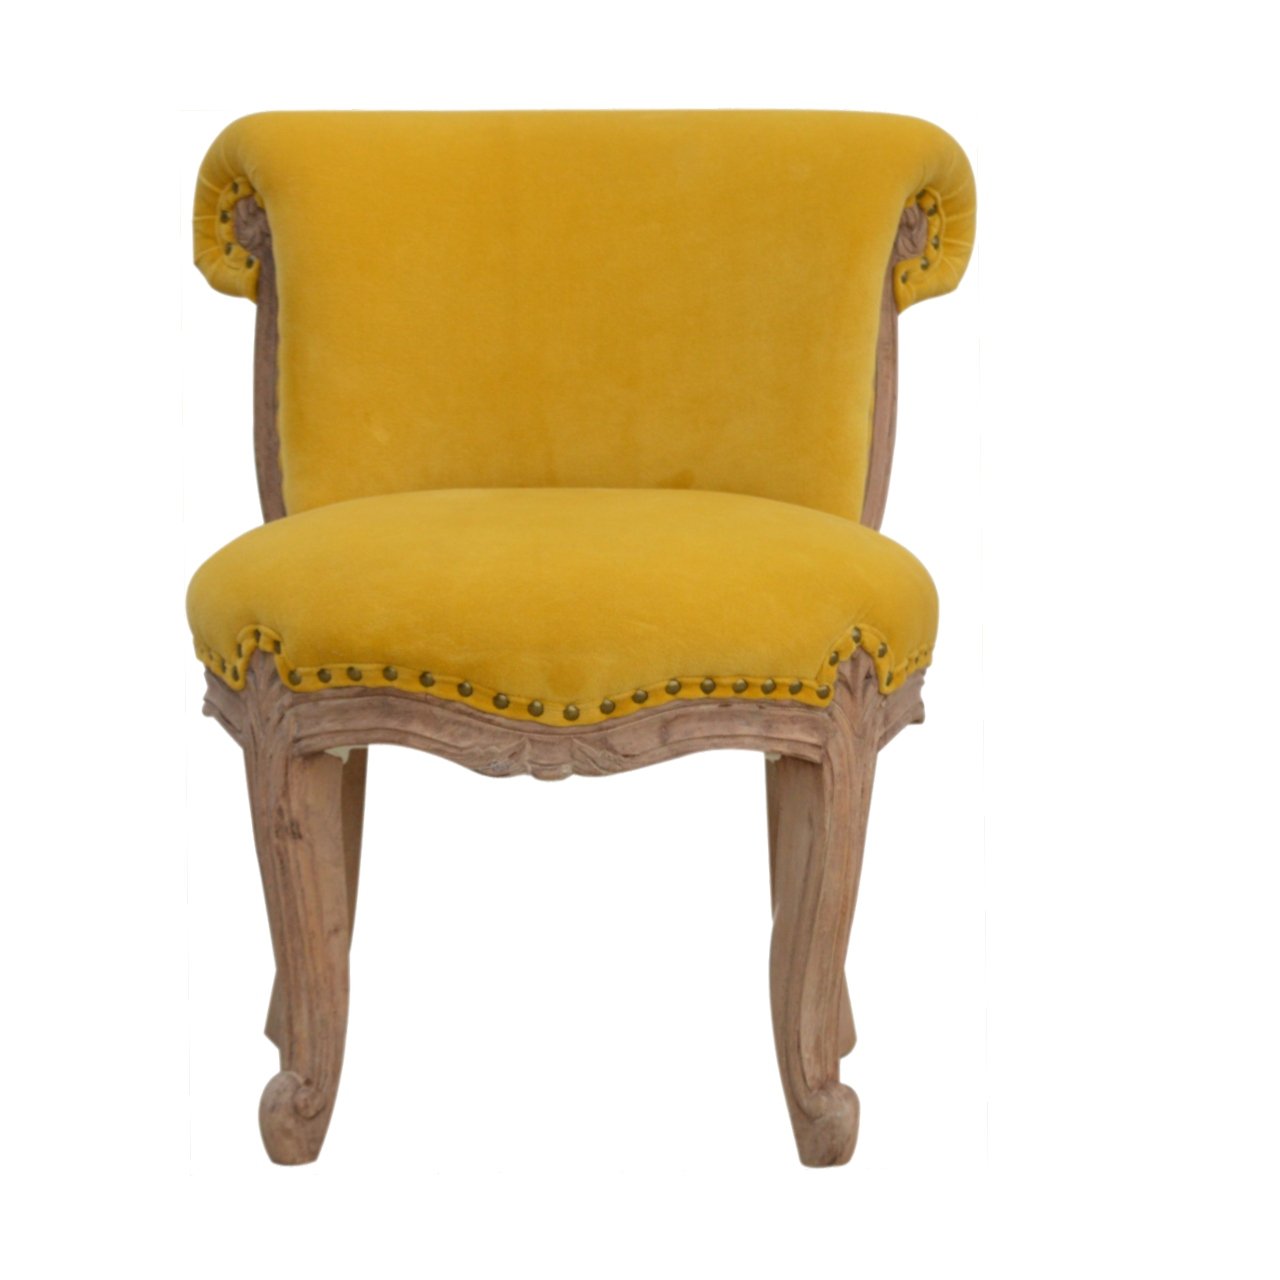 View Mustard Velvet Studded Chair information